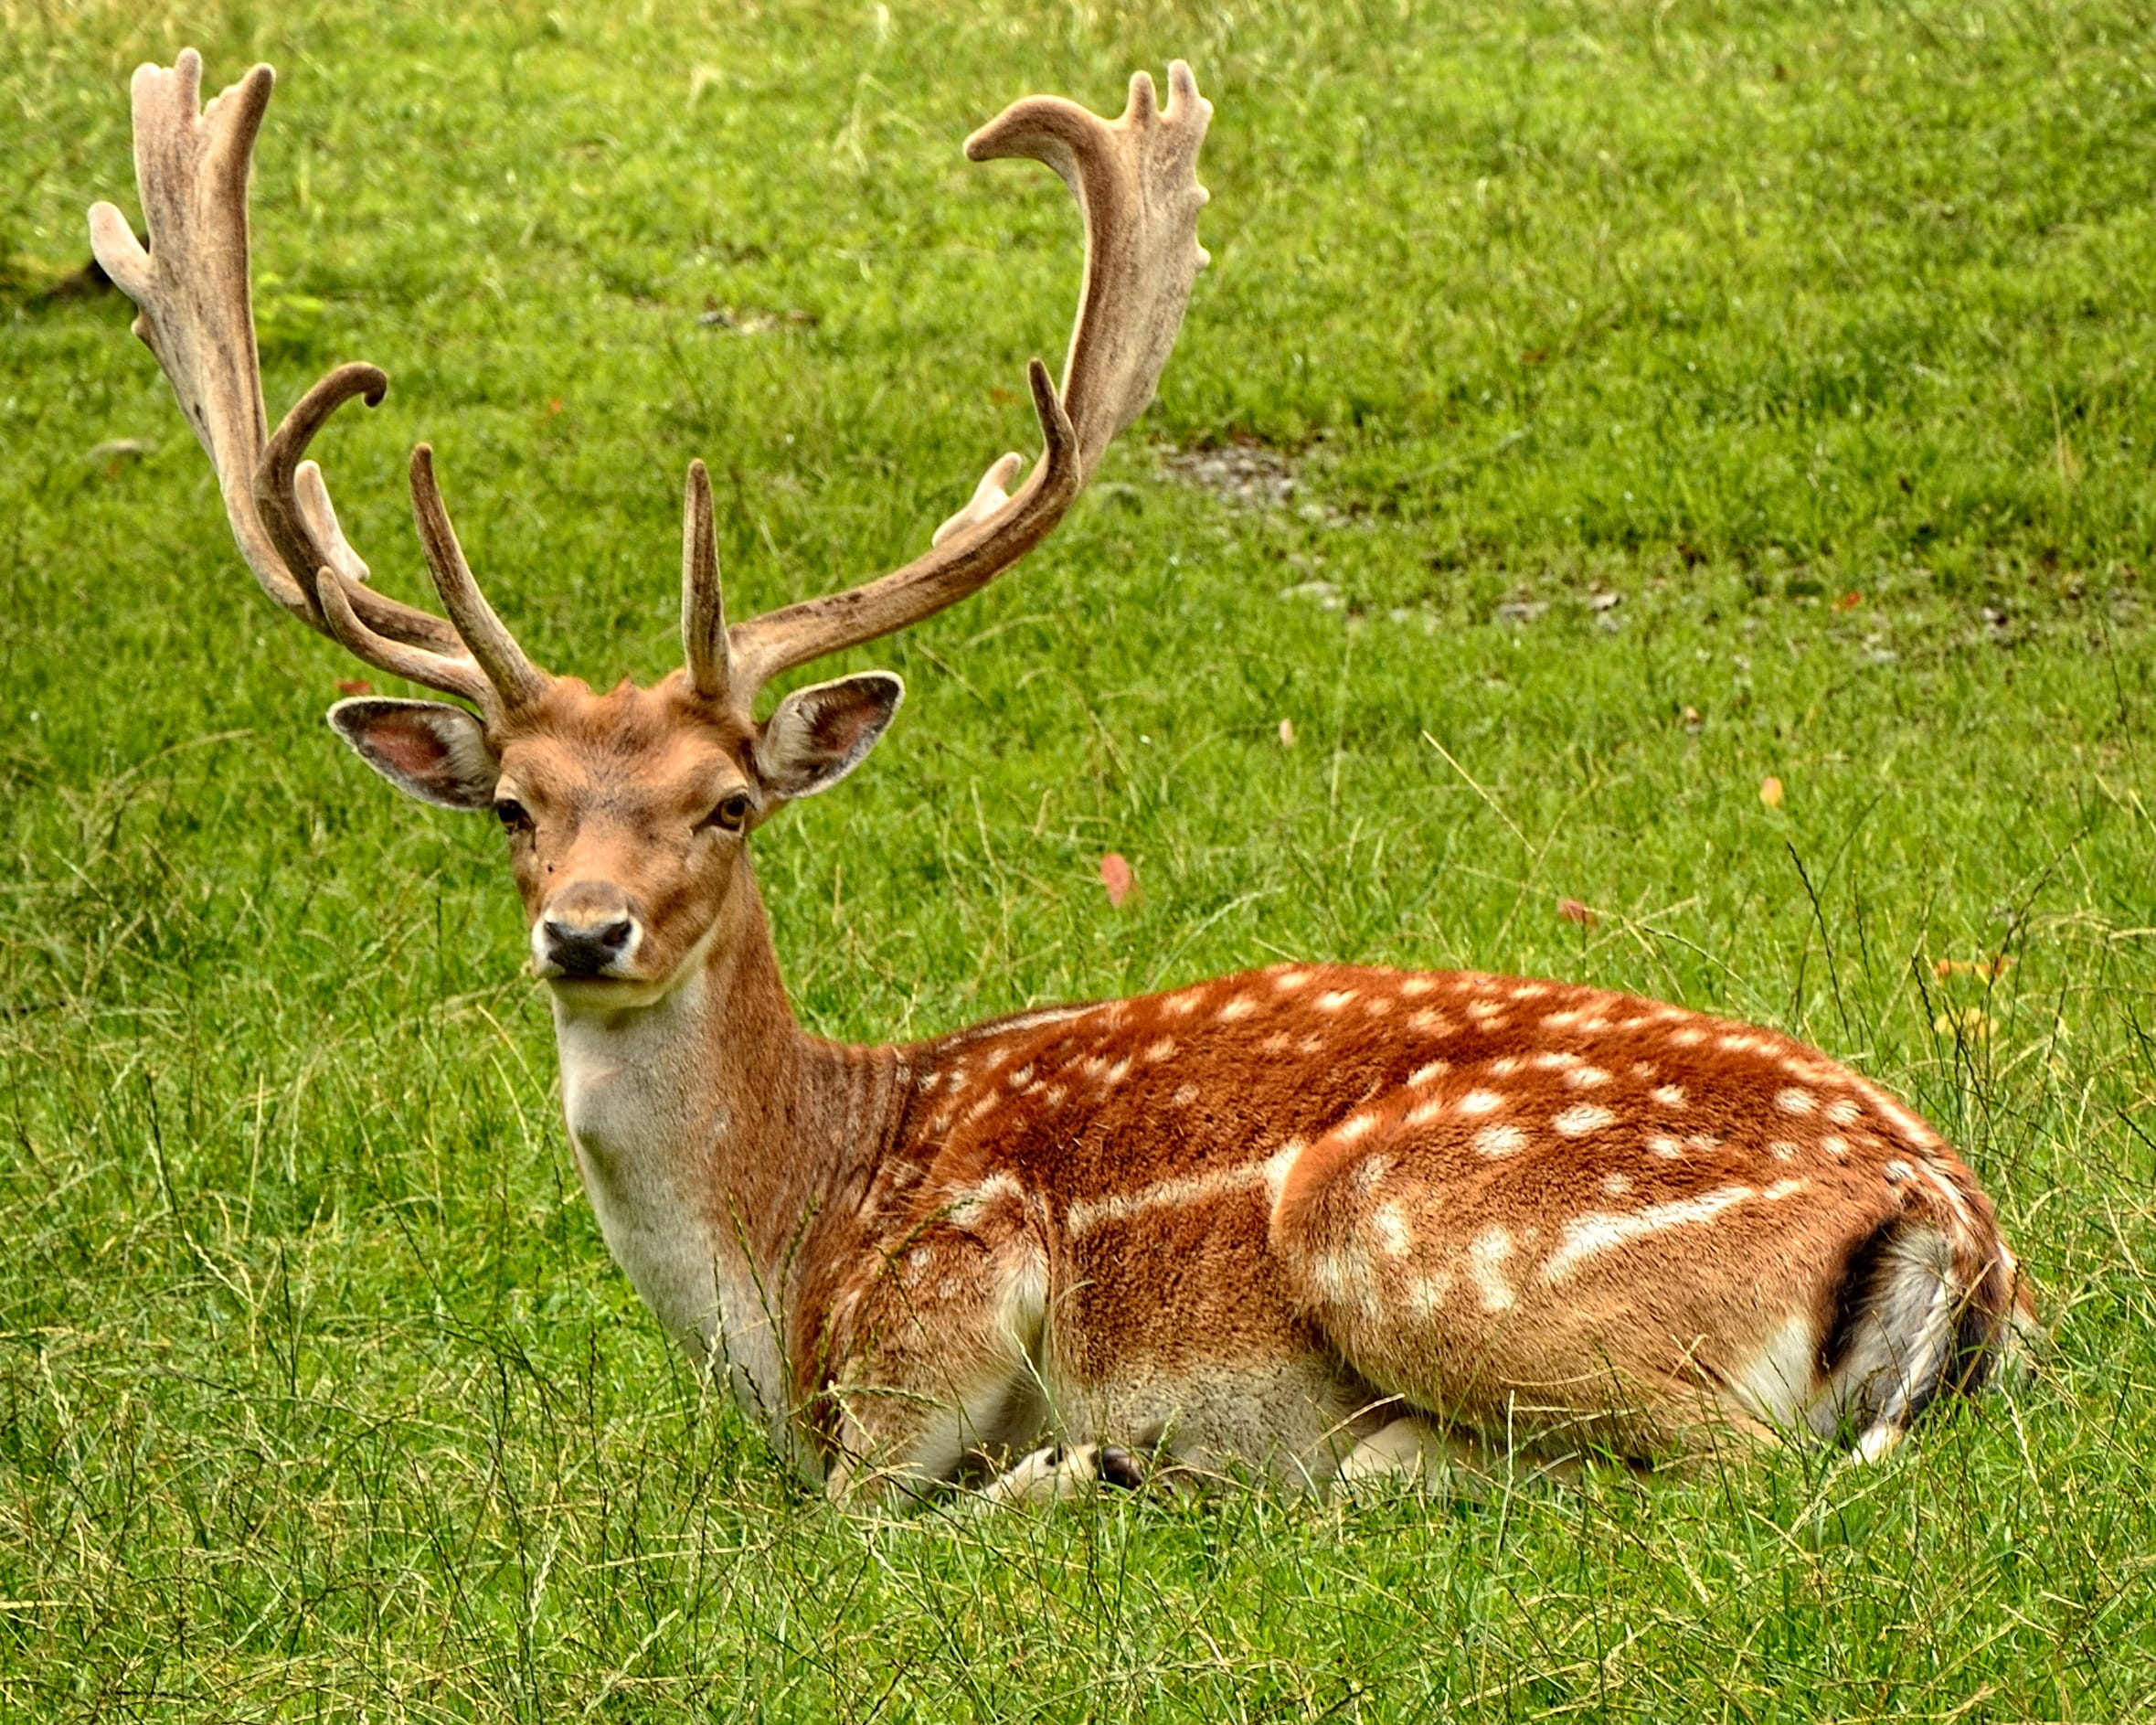 Brown Deer Laying on Grass Field, animal, antler, meadow, nature